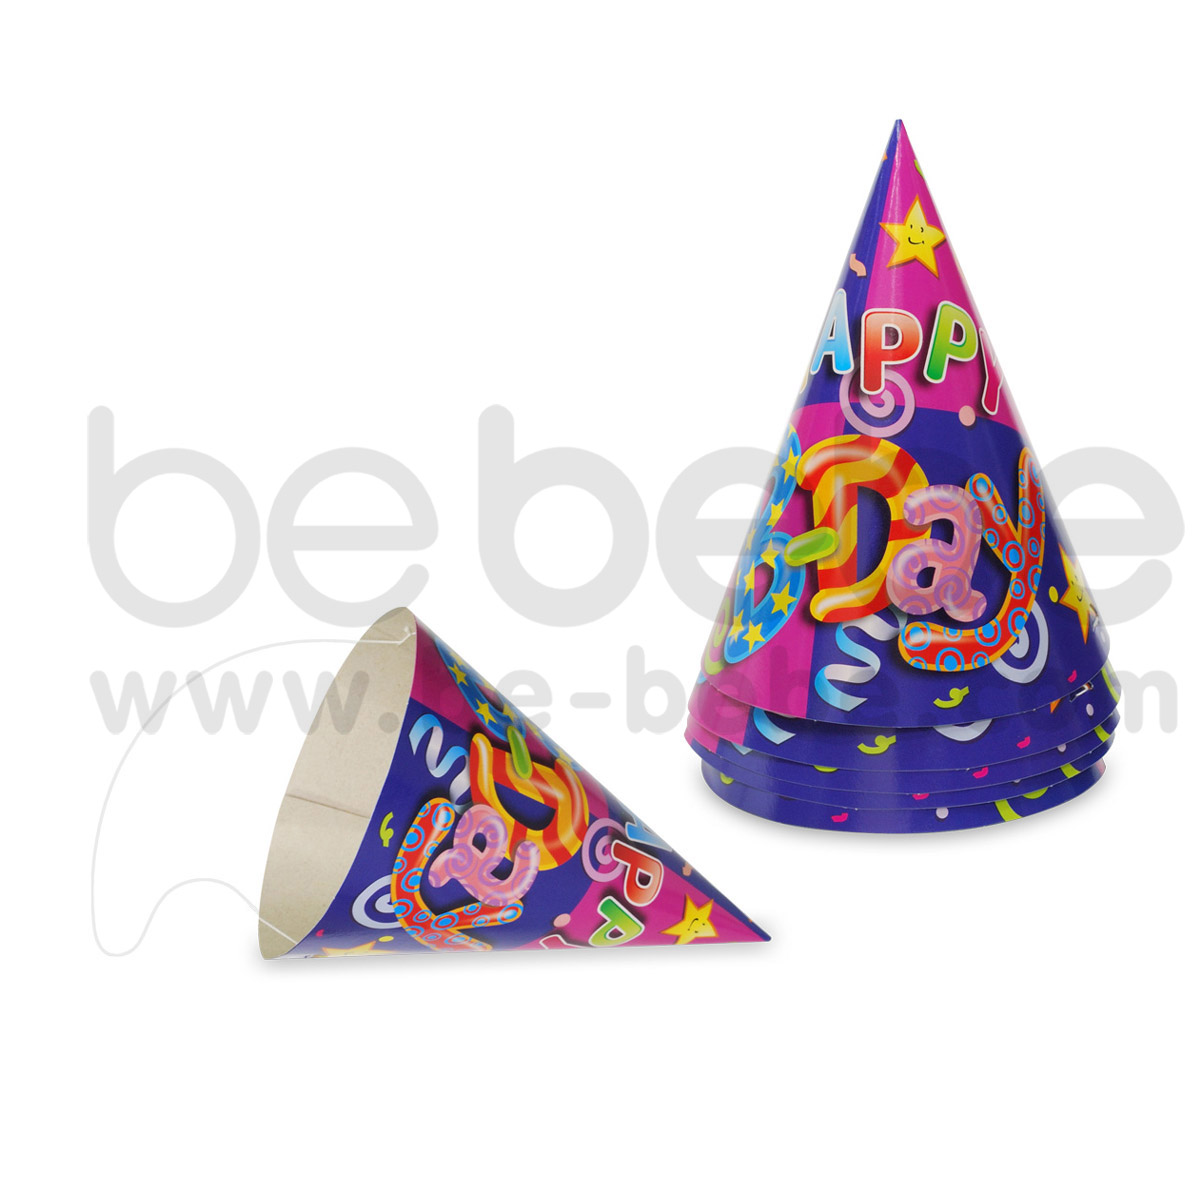 PARTY BUG : หมวกโคนปาร์ตี้ 6 inch.x 6 Packs คุณภาพสูง* ดีไซน์สวยงาม ได้มาตรฐานEN71*ปลอดภัย ECO*เป็นมิตรกับสิ่งแวดล้อม